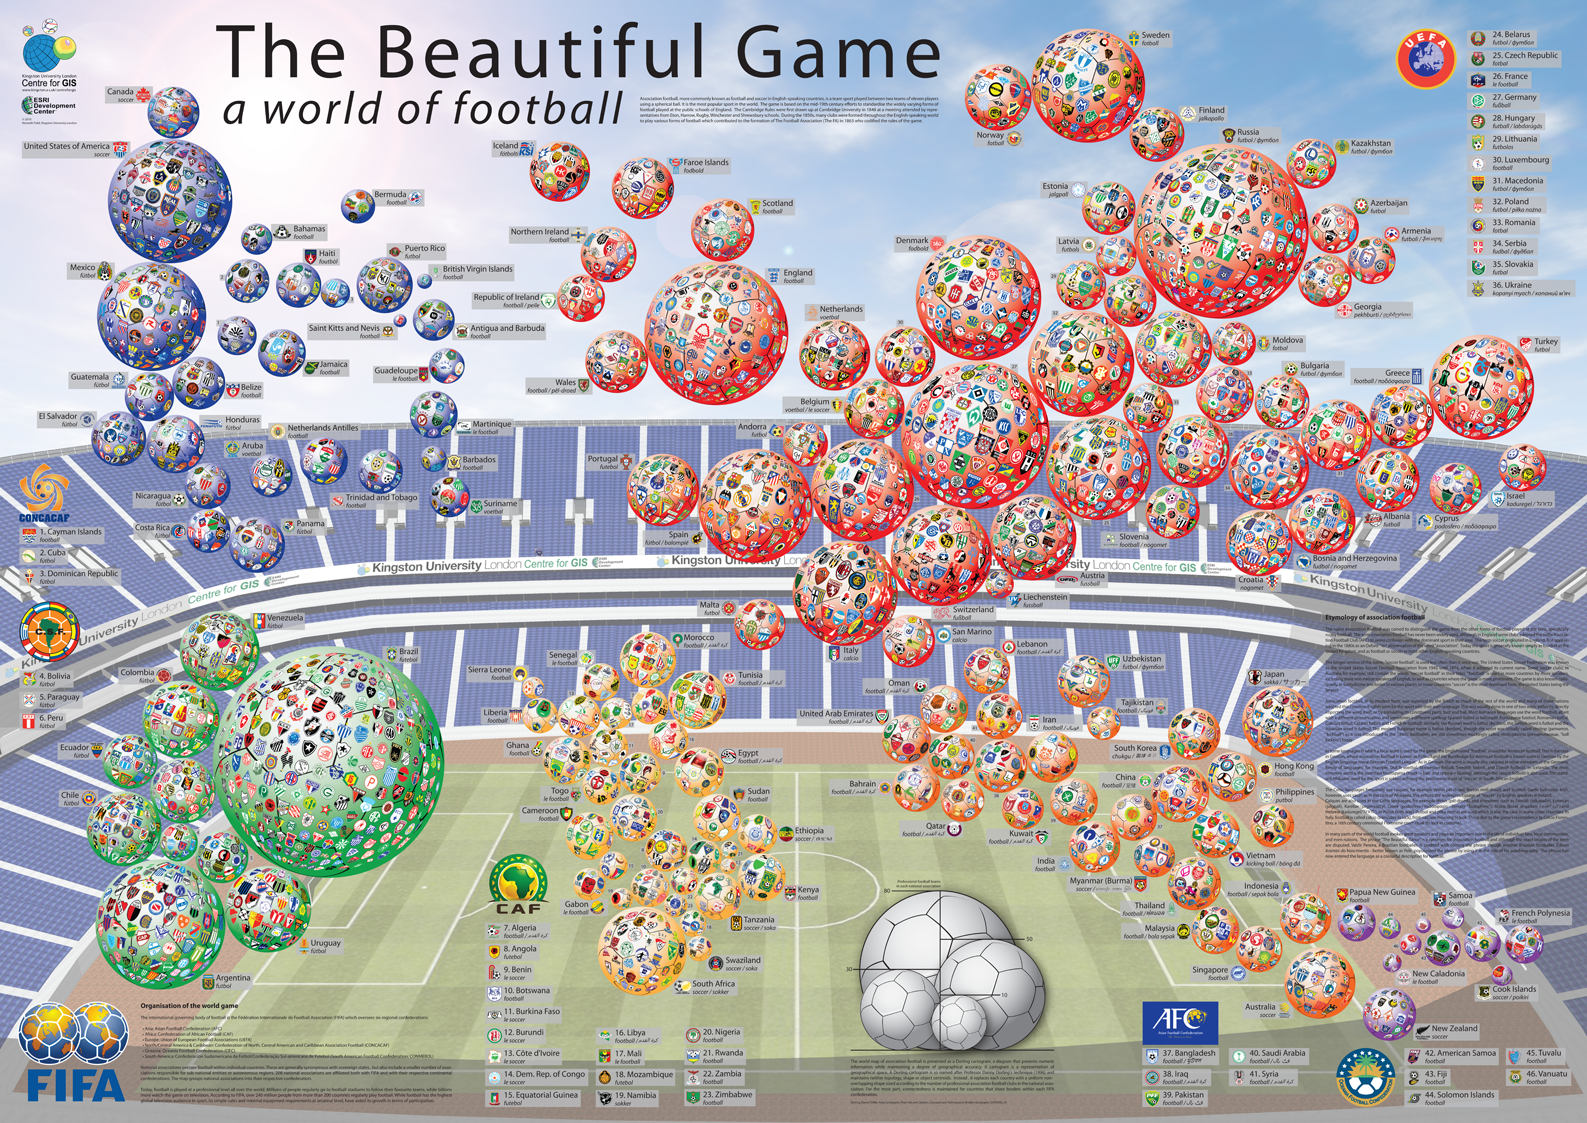 The beautiful game